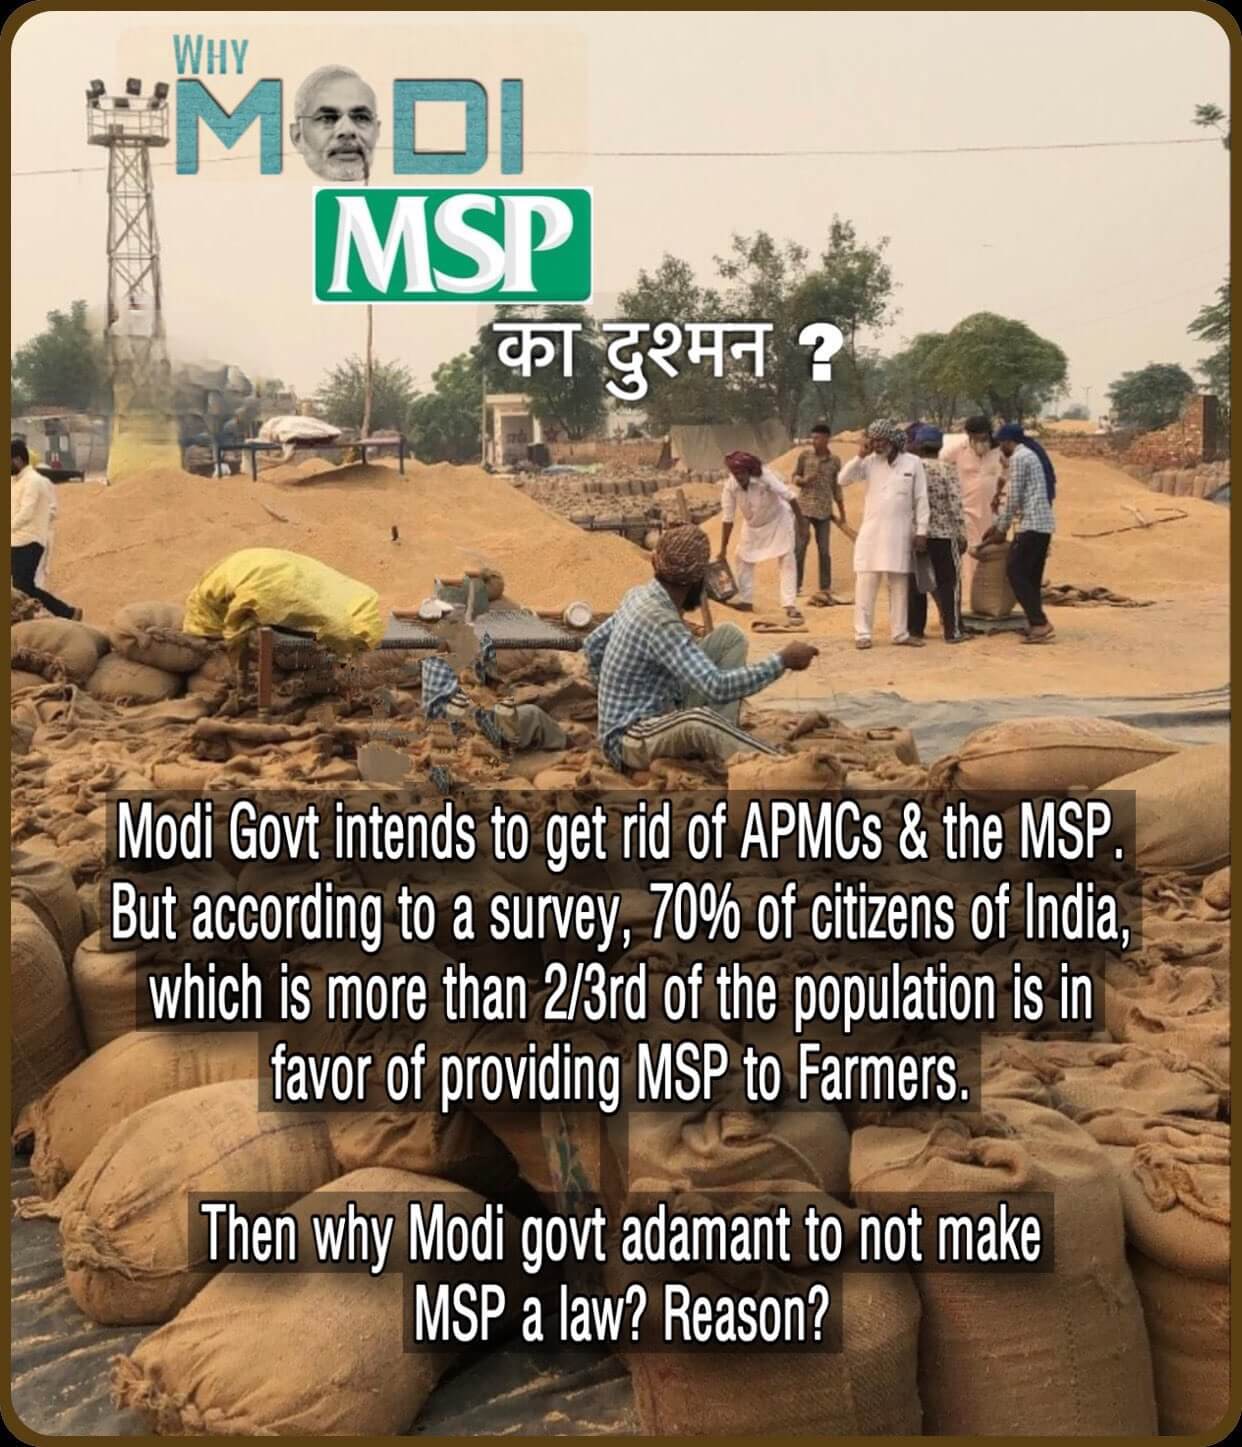 msp is farmers right